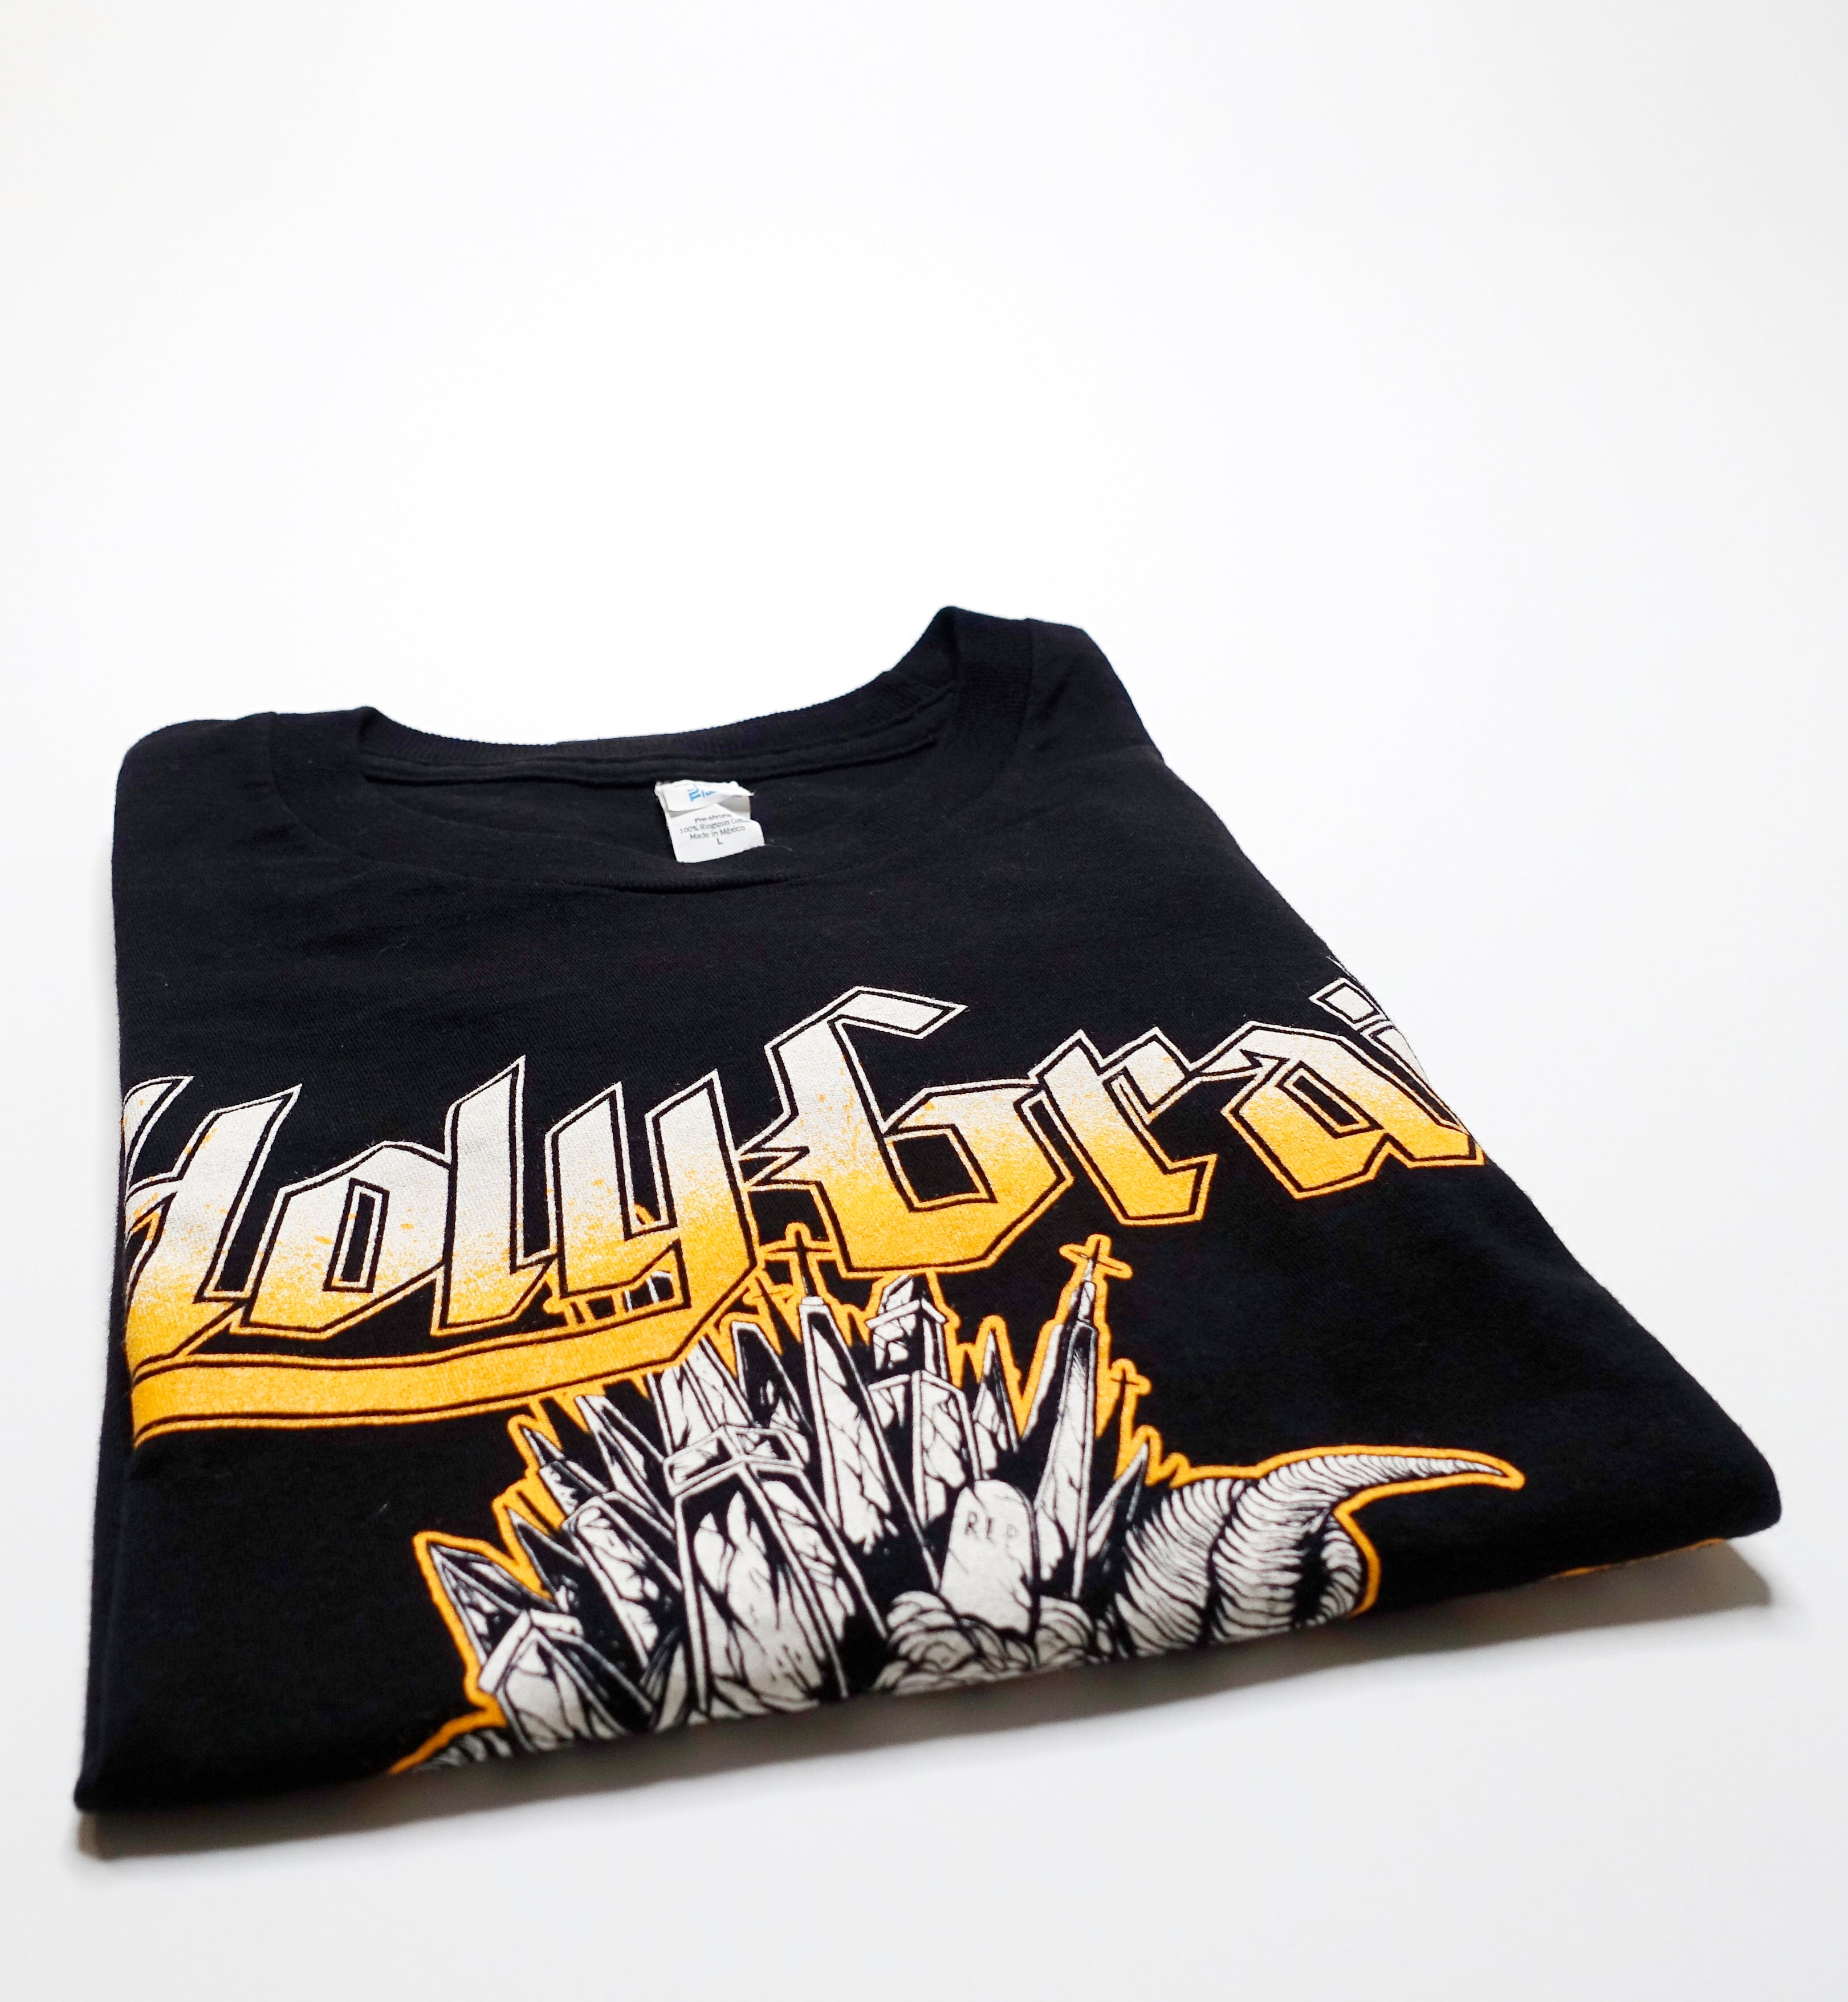 Holy Grail – Graveyard Demon 2010 Tour Shirt Size Large (Artwork by Skinner)